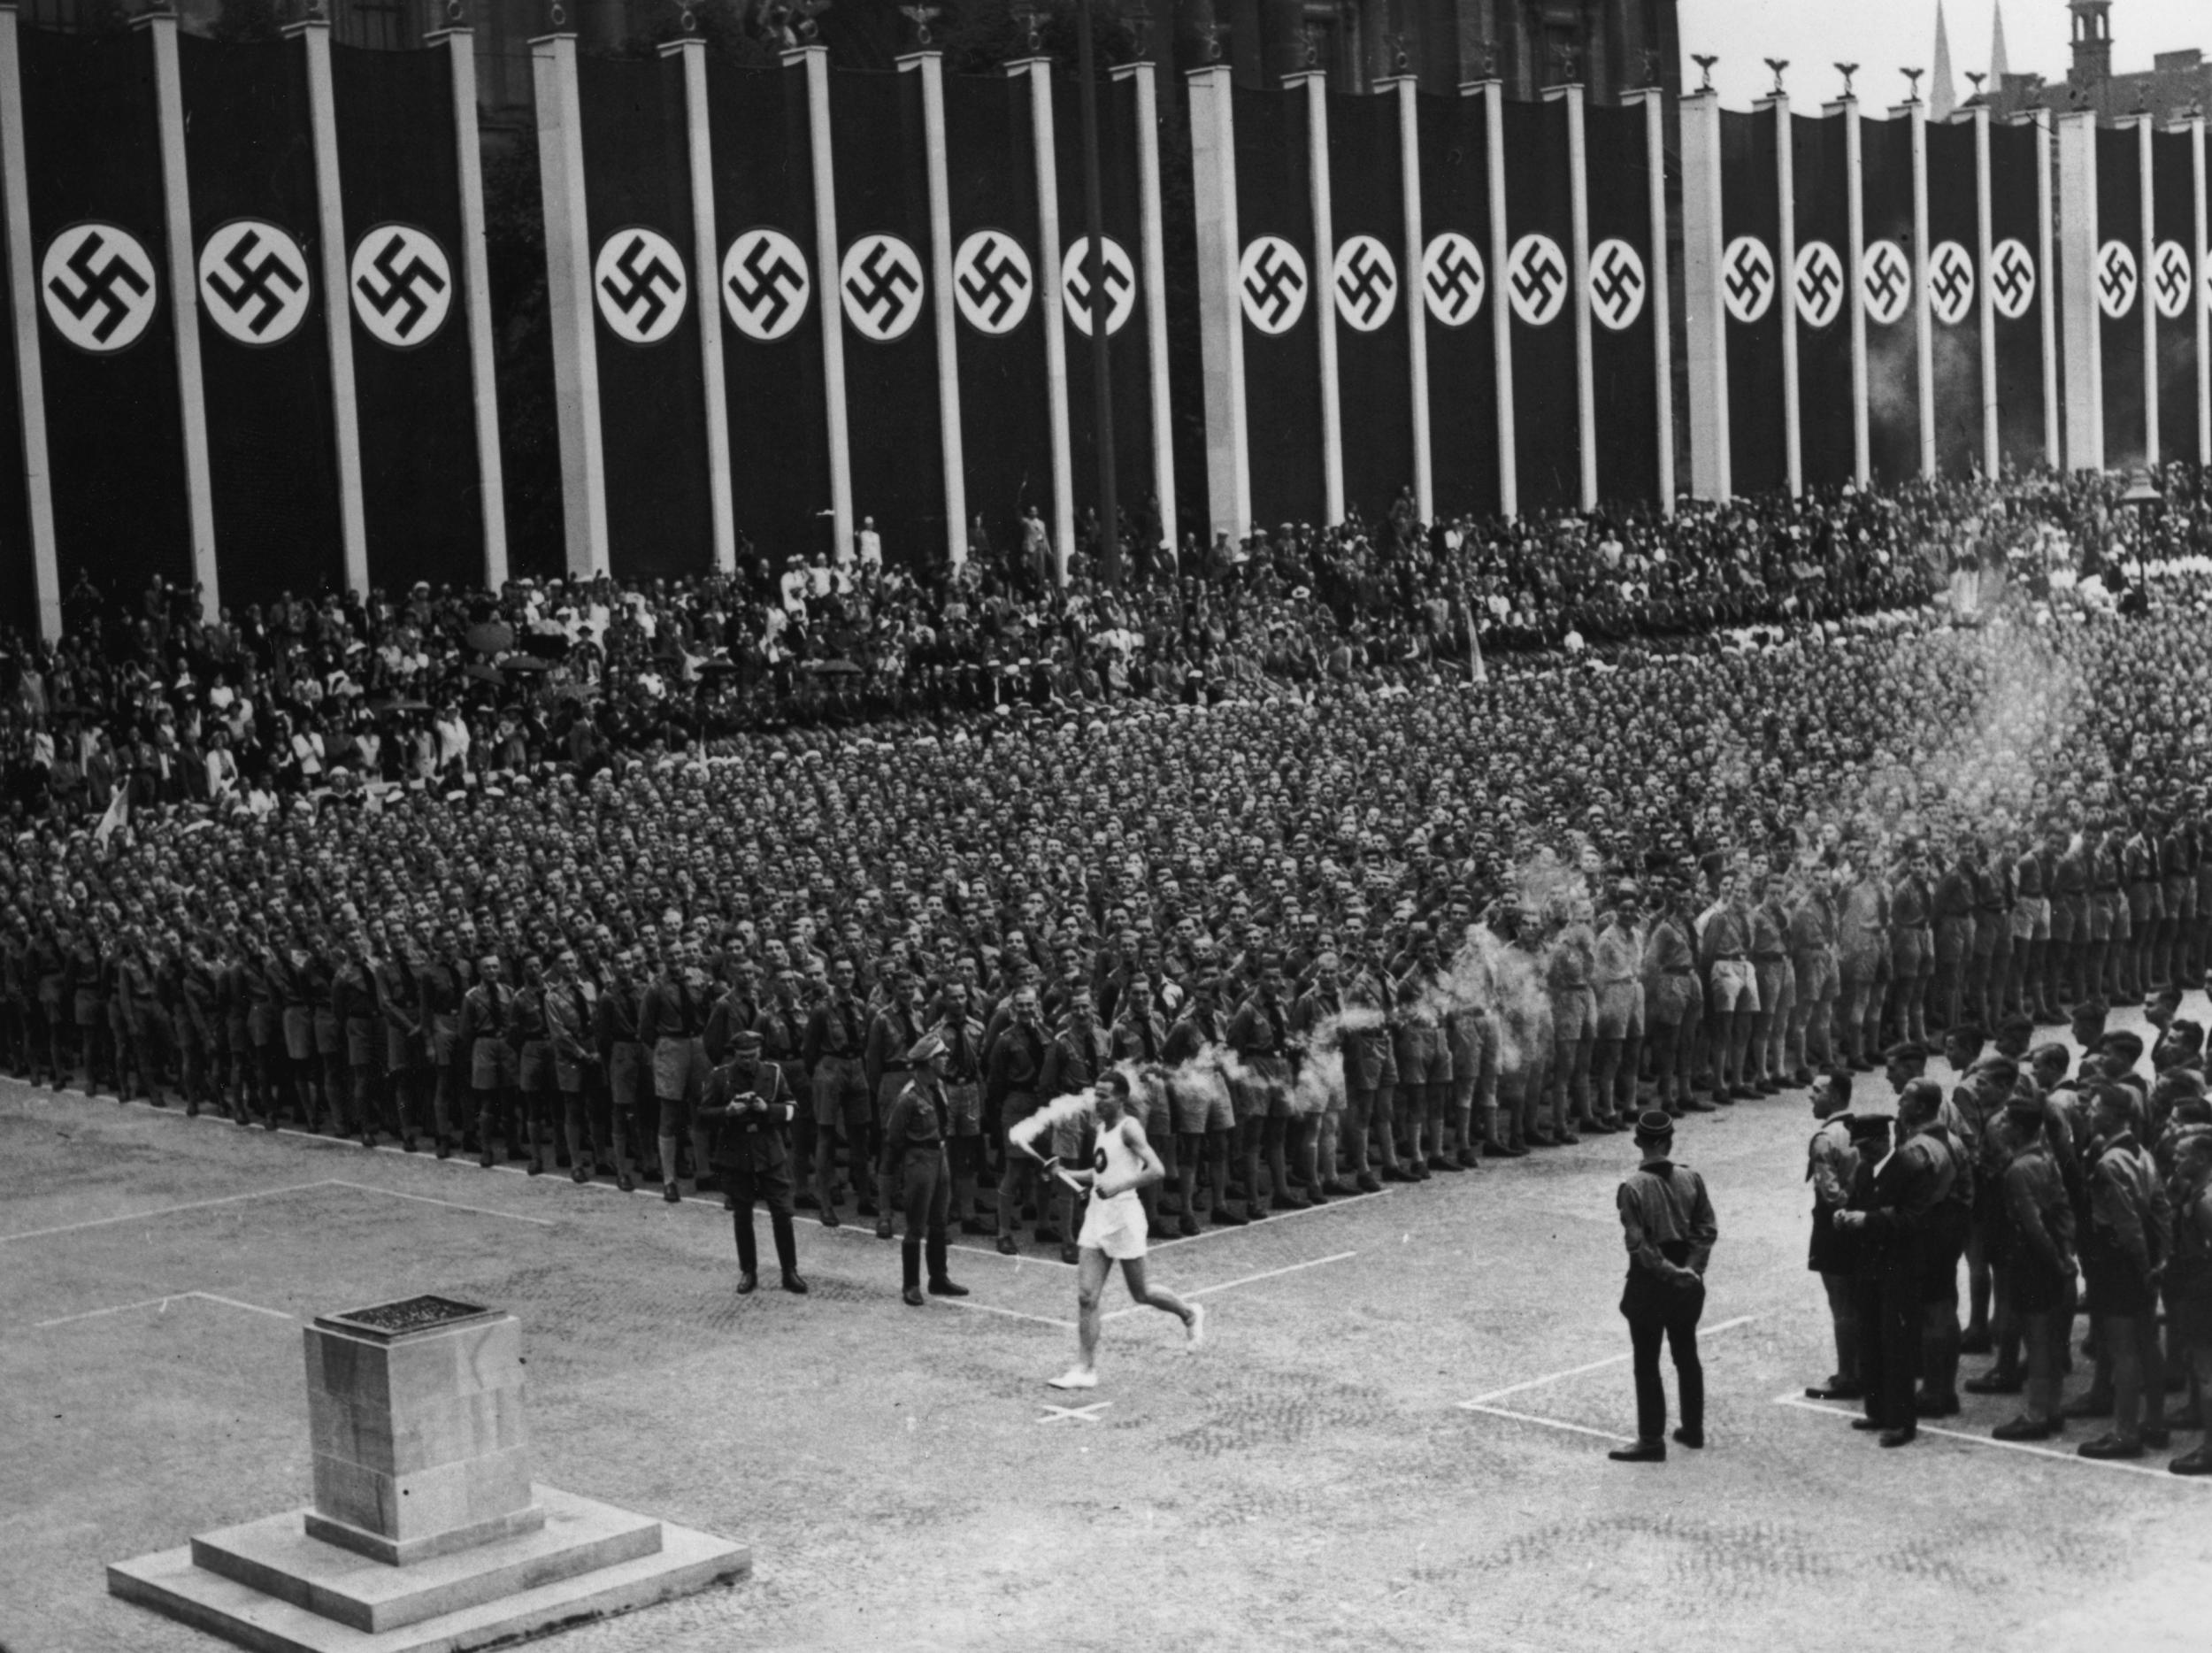 The last Olympic runner reaches Lustgarten in Berlin, in 1936